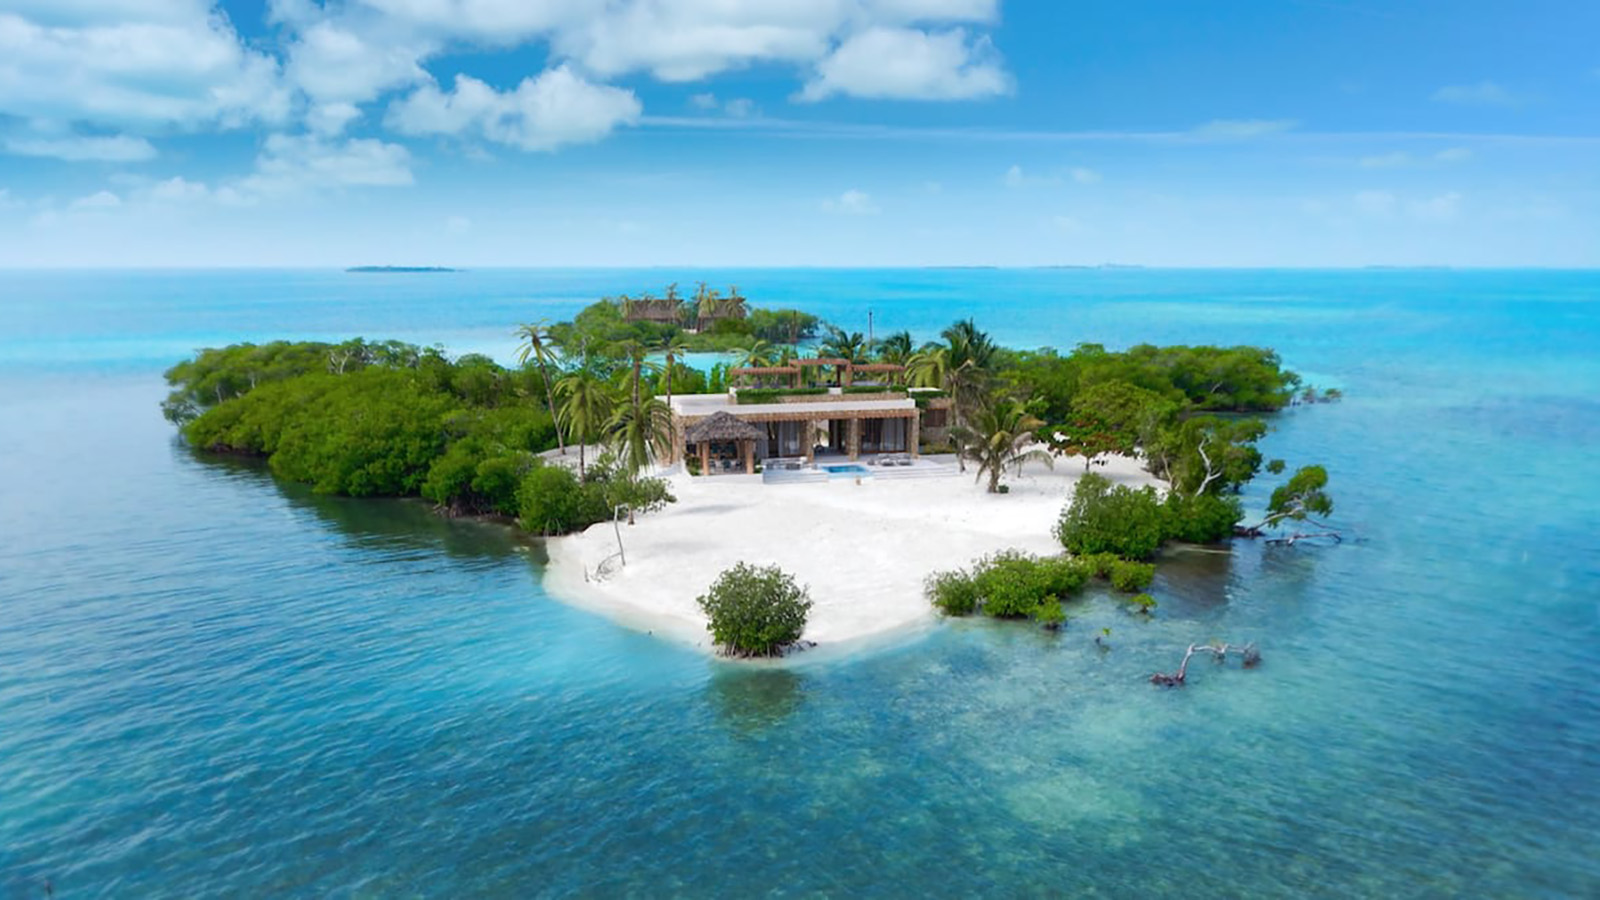 The elegant villa on private island Gladden Island in Belize